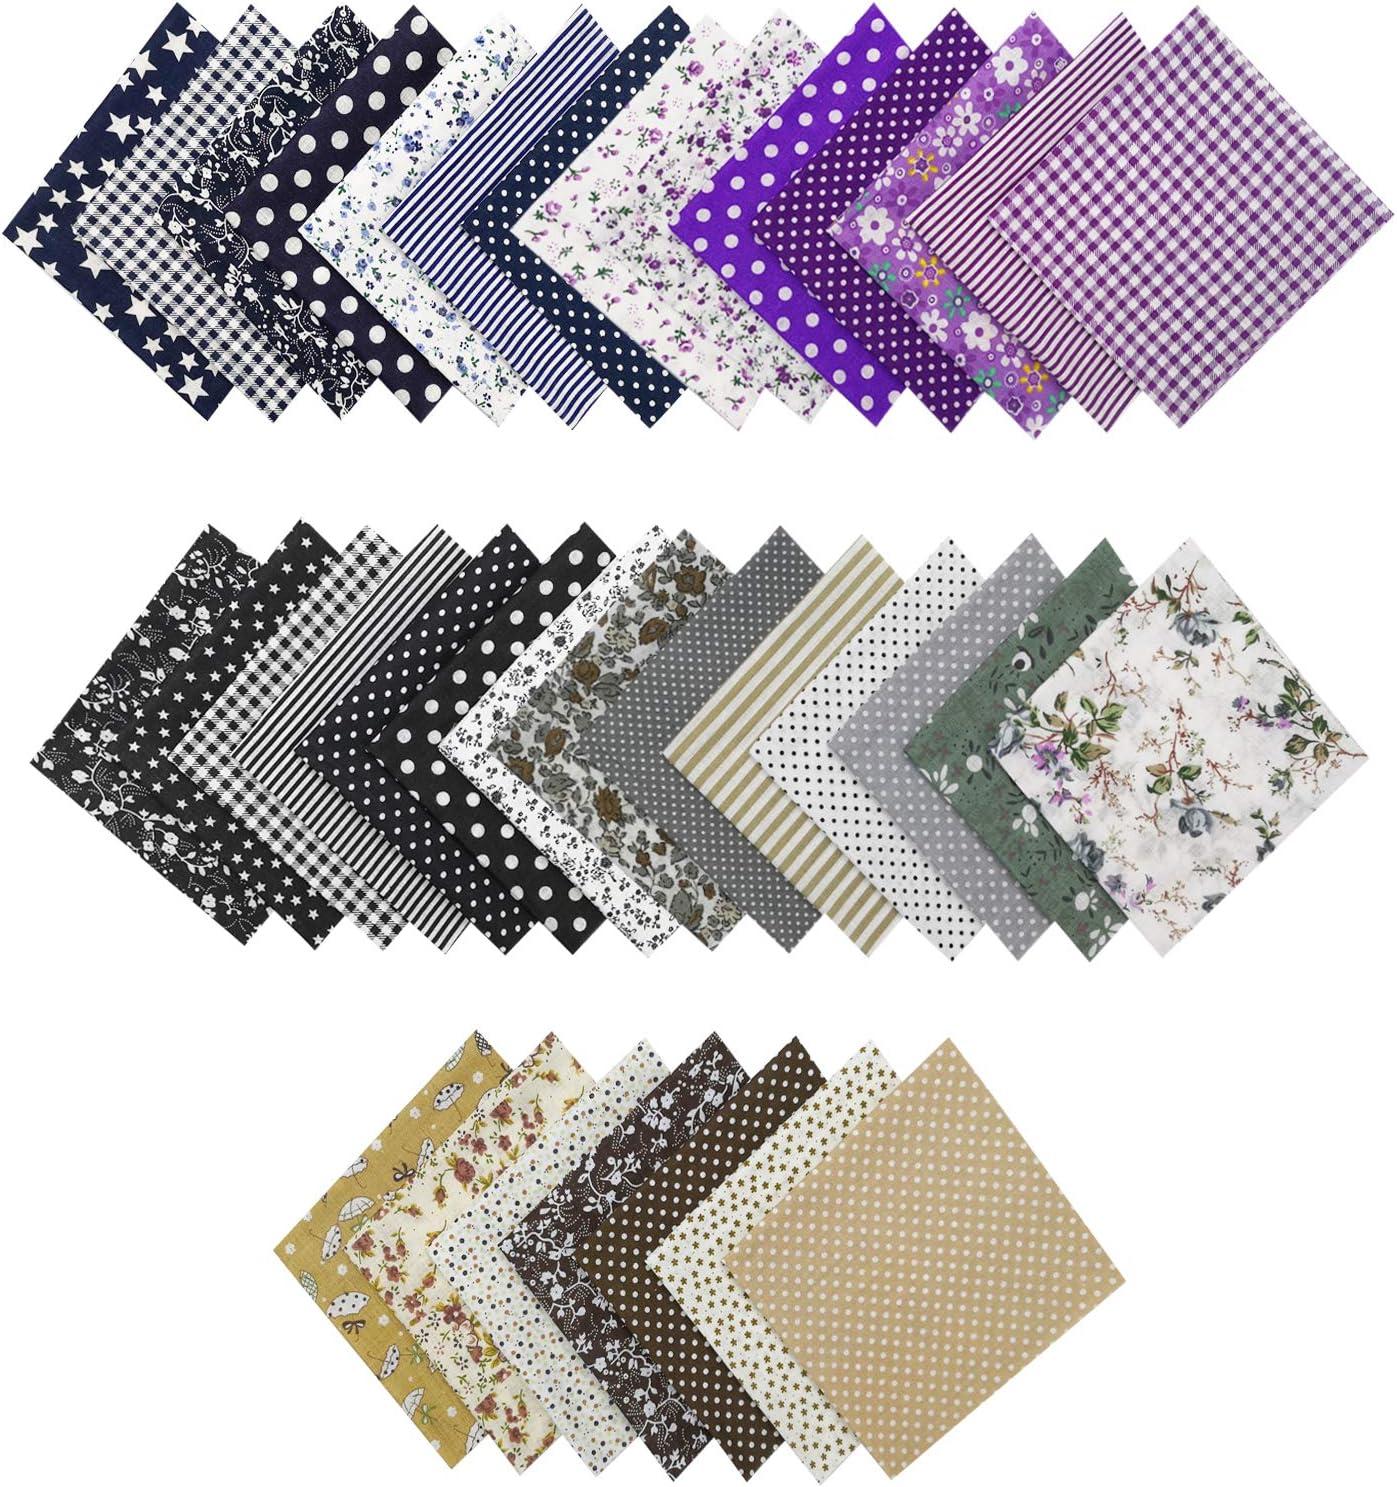 Chris.W 35Pcs Quilting Fabric Squares Sheets, 10x10 Cotton Craft Fabric  Bundle Patchwork Pre-Cut Quilt Squares for DIY Sewing Scrapbooking Quilting  Dot Pattern(Dark Color Set) Purple/Brown/Dark Blue/Black/Grey